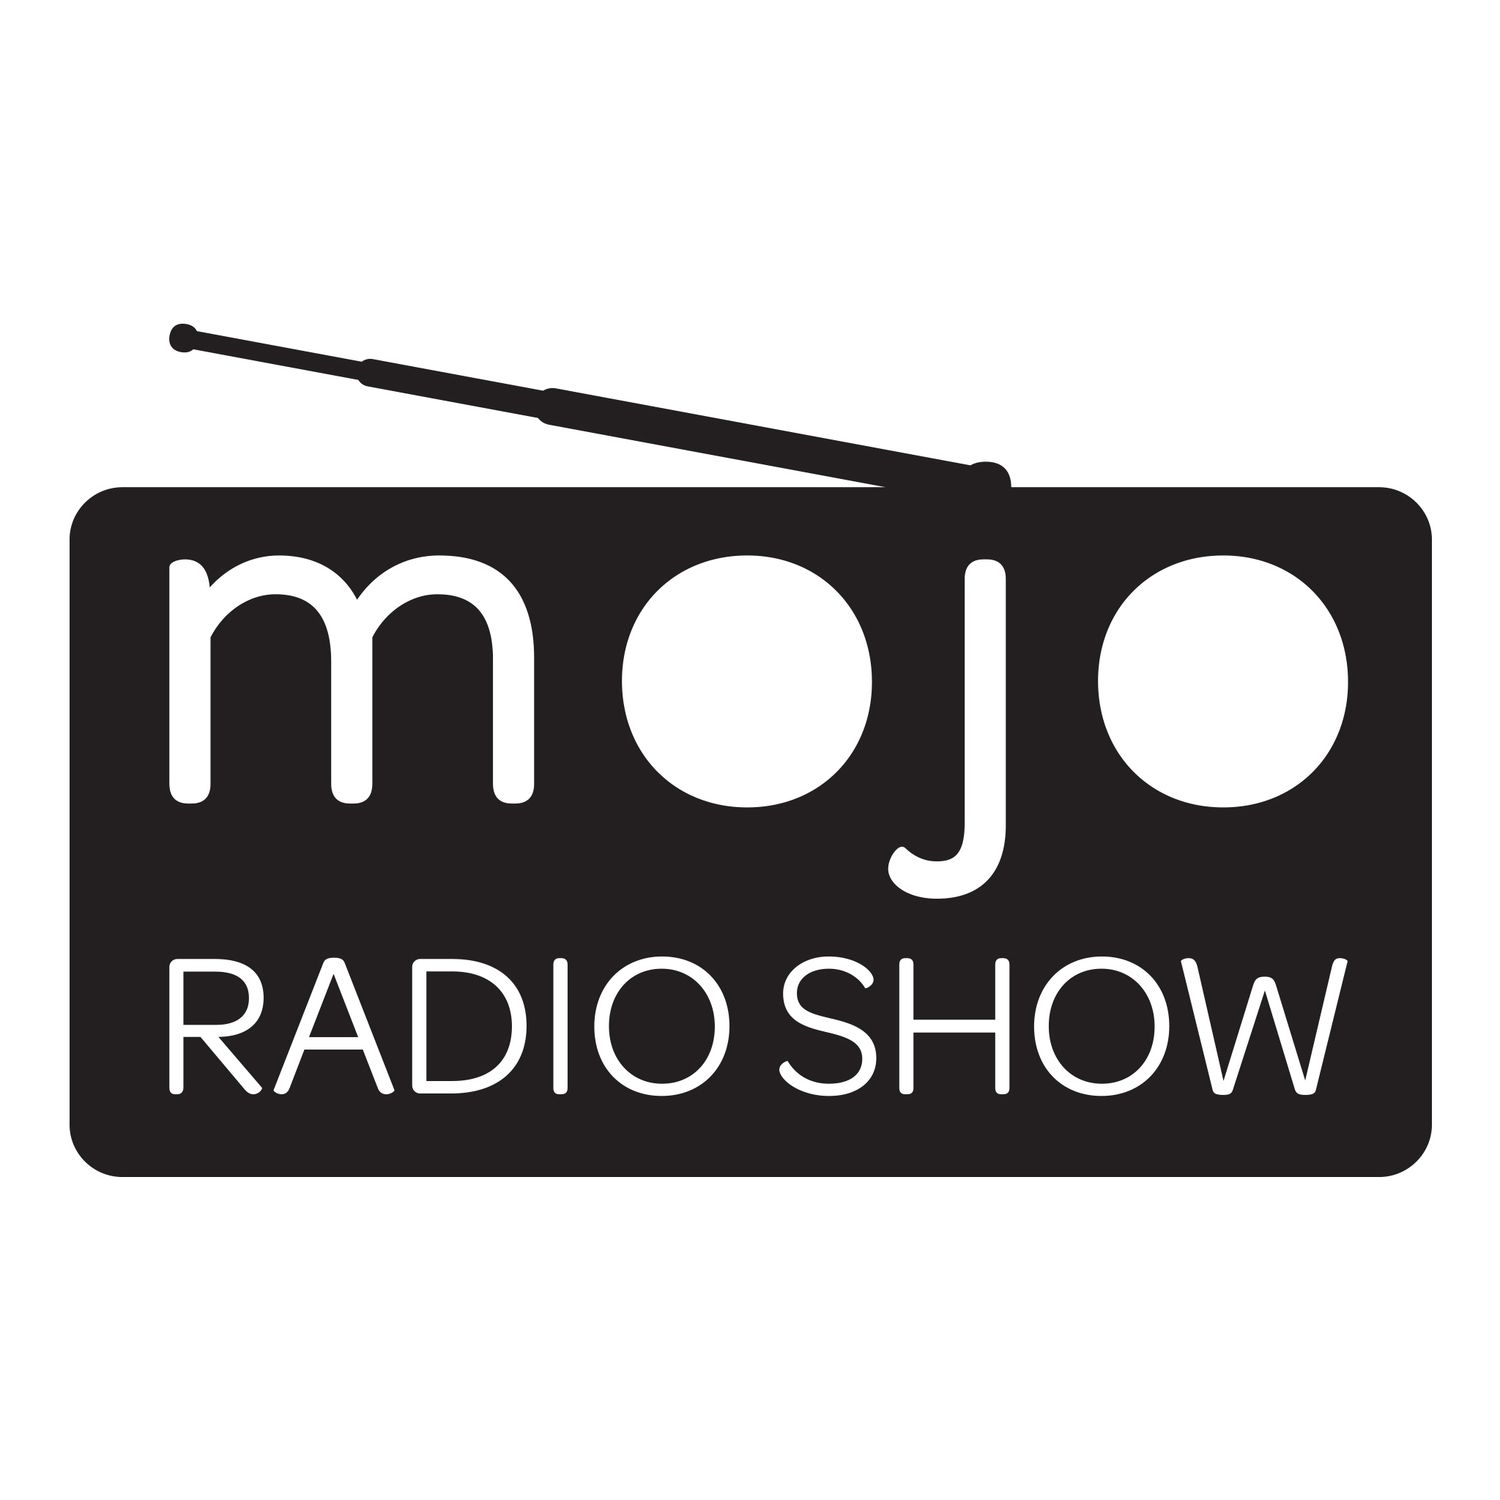 The Mojo Radio Show EP 193: Develop Curiosity That Unlocks Your Next Killer Idea - Evette Cordy